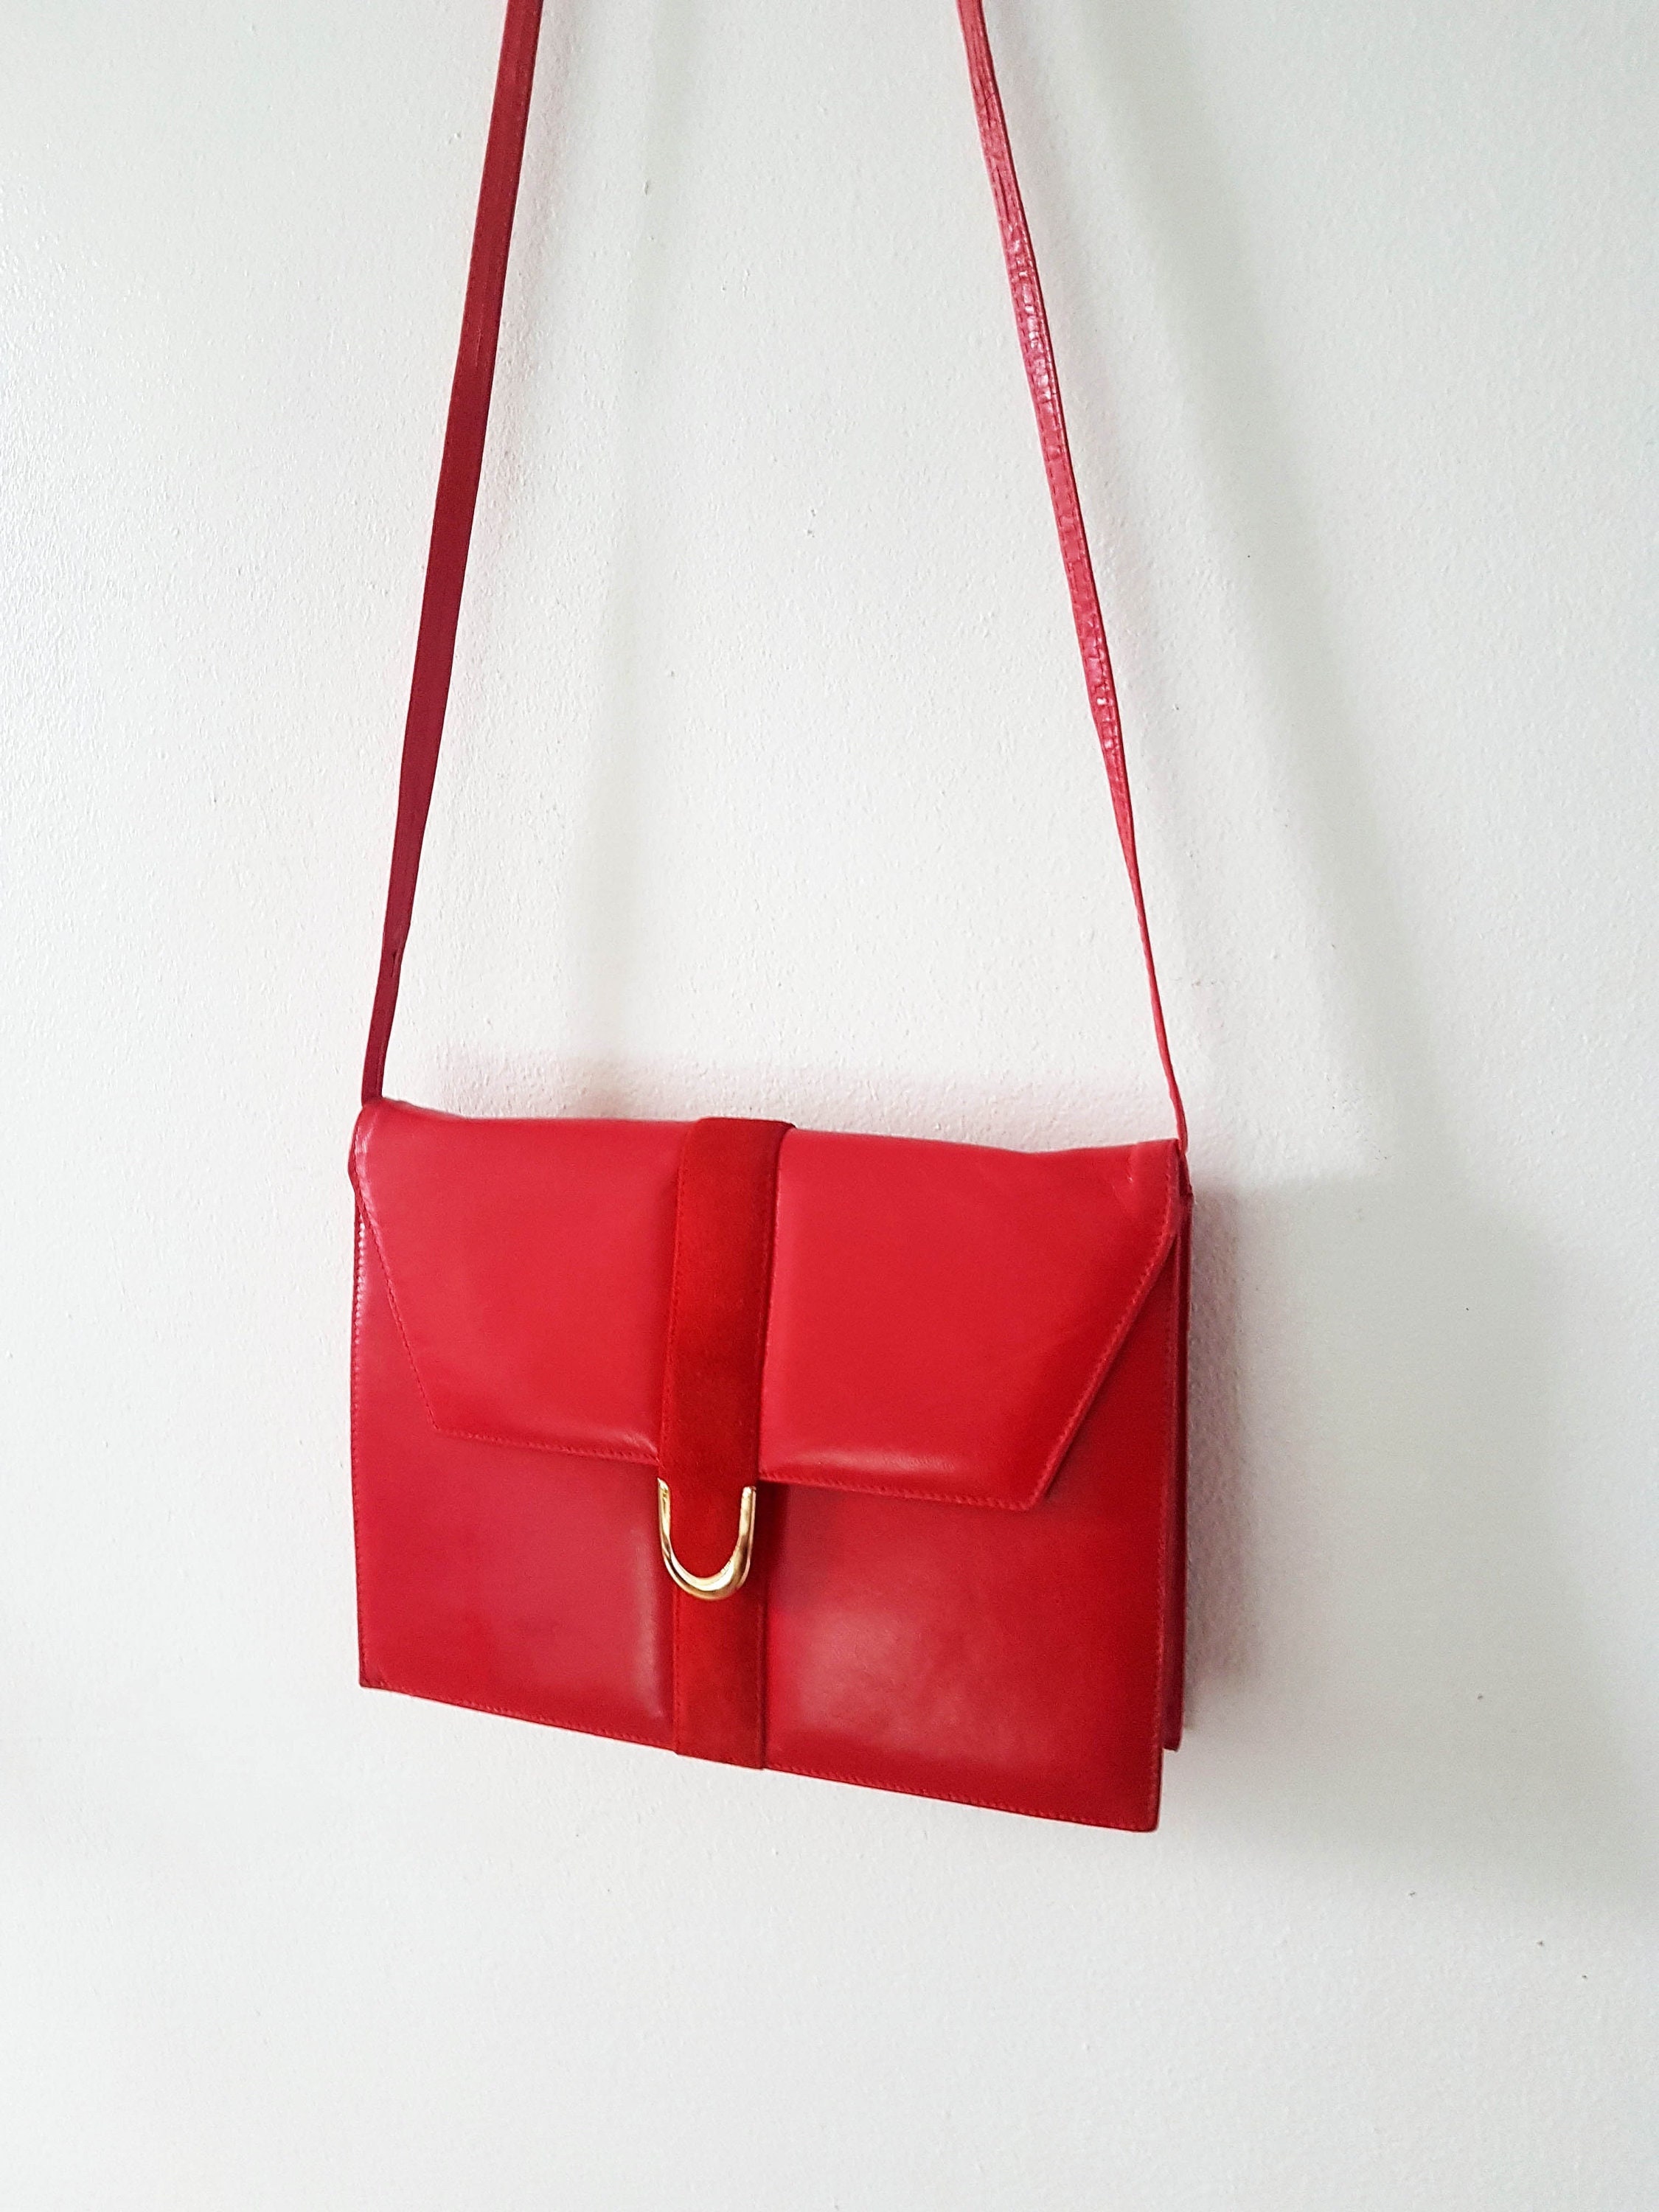 ALDO Handbags for sale in Ivalee, Alabama | Facebook Marketplace | Facebook